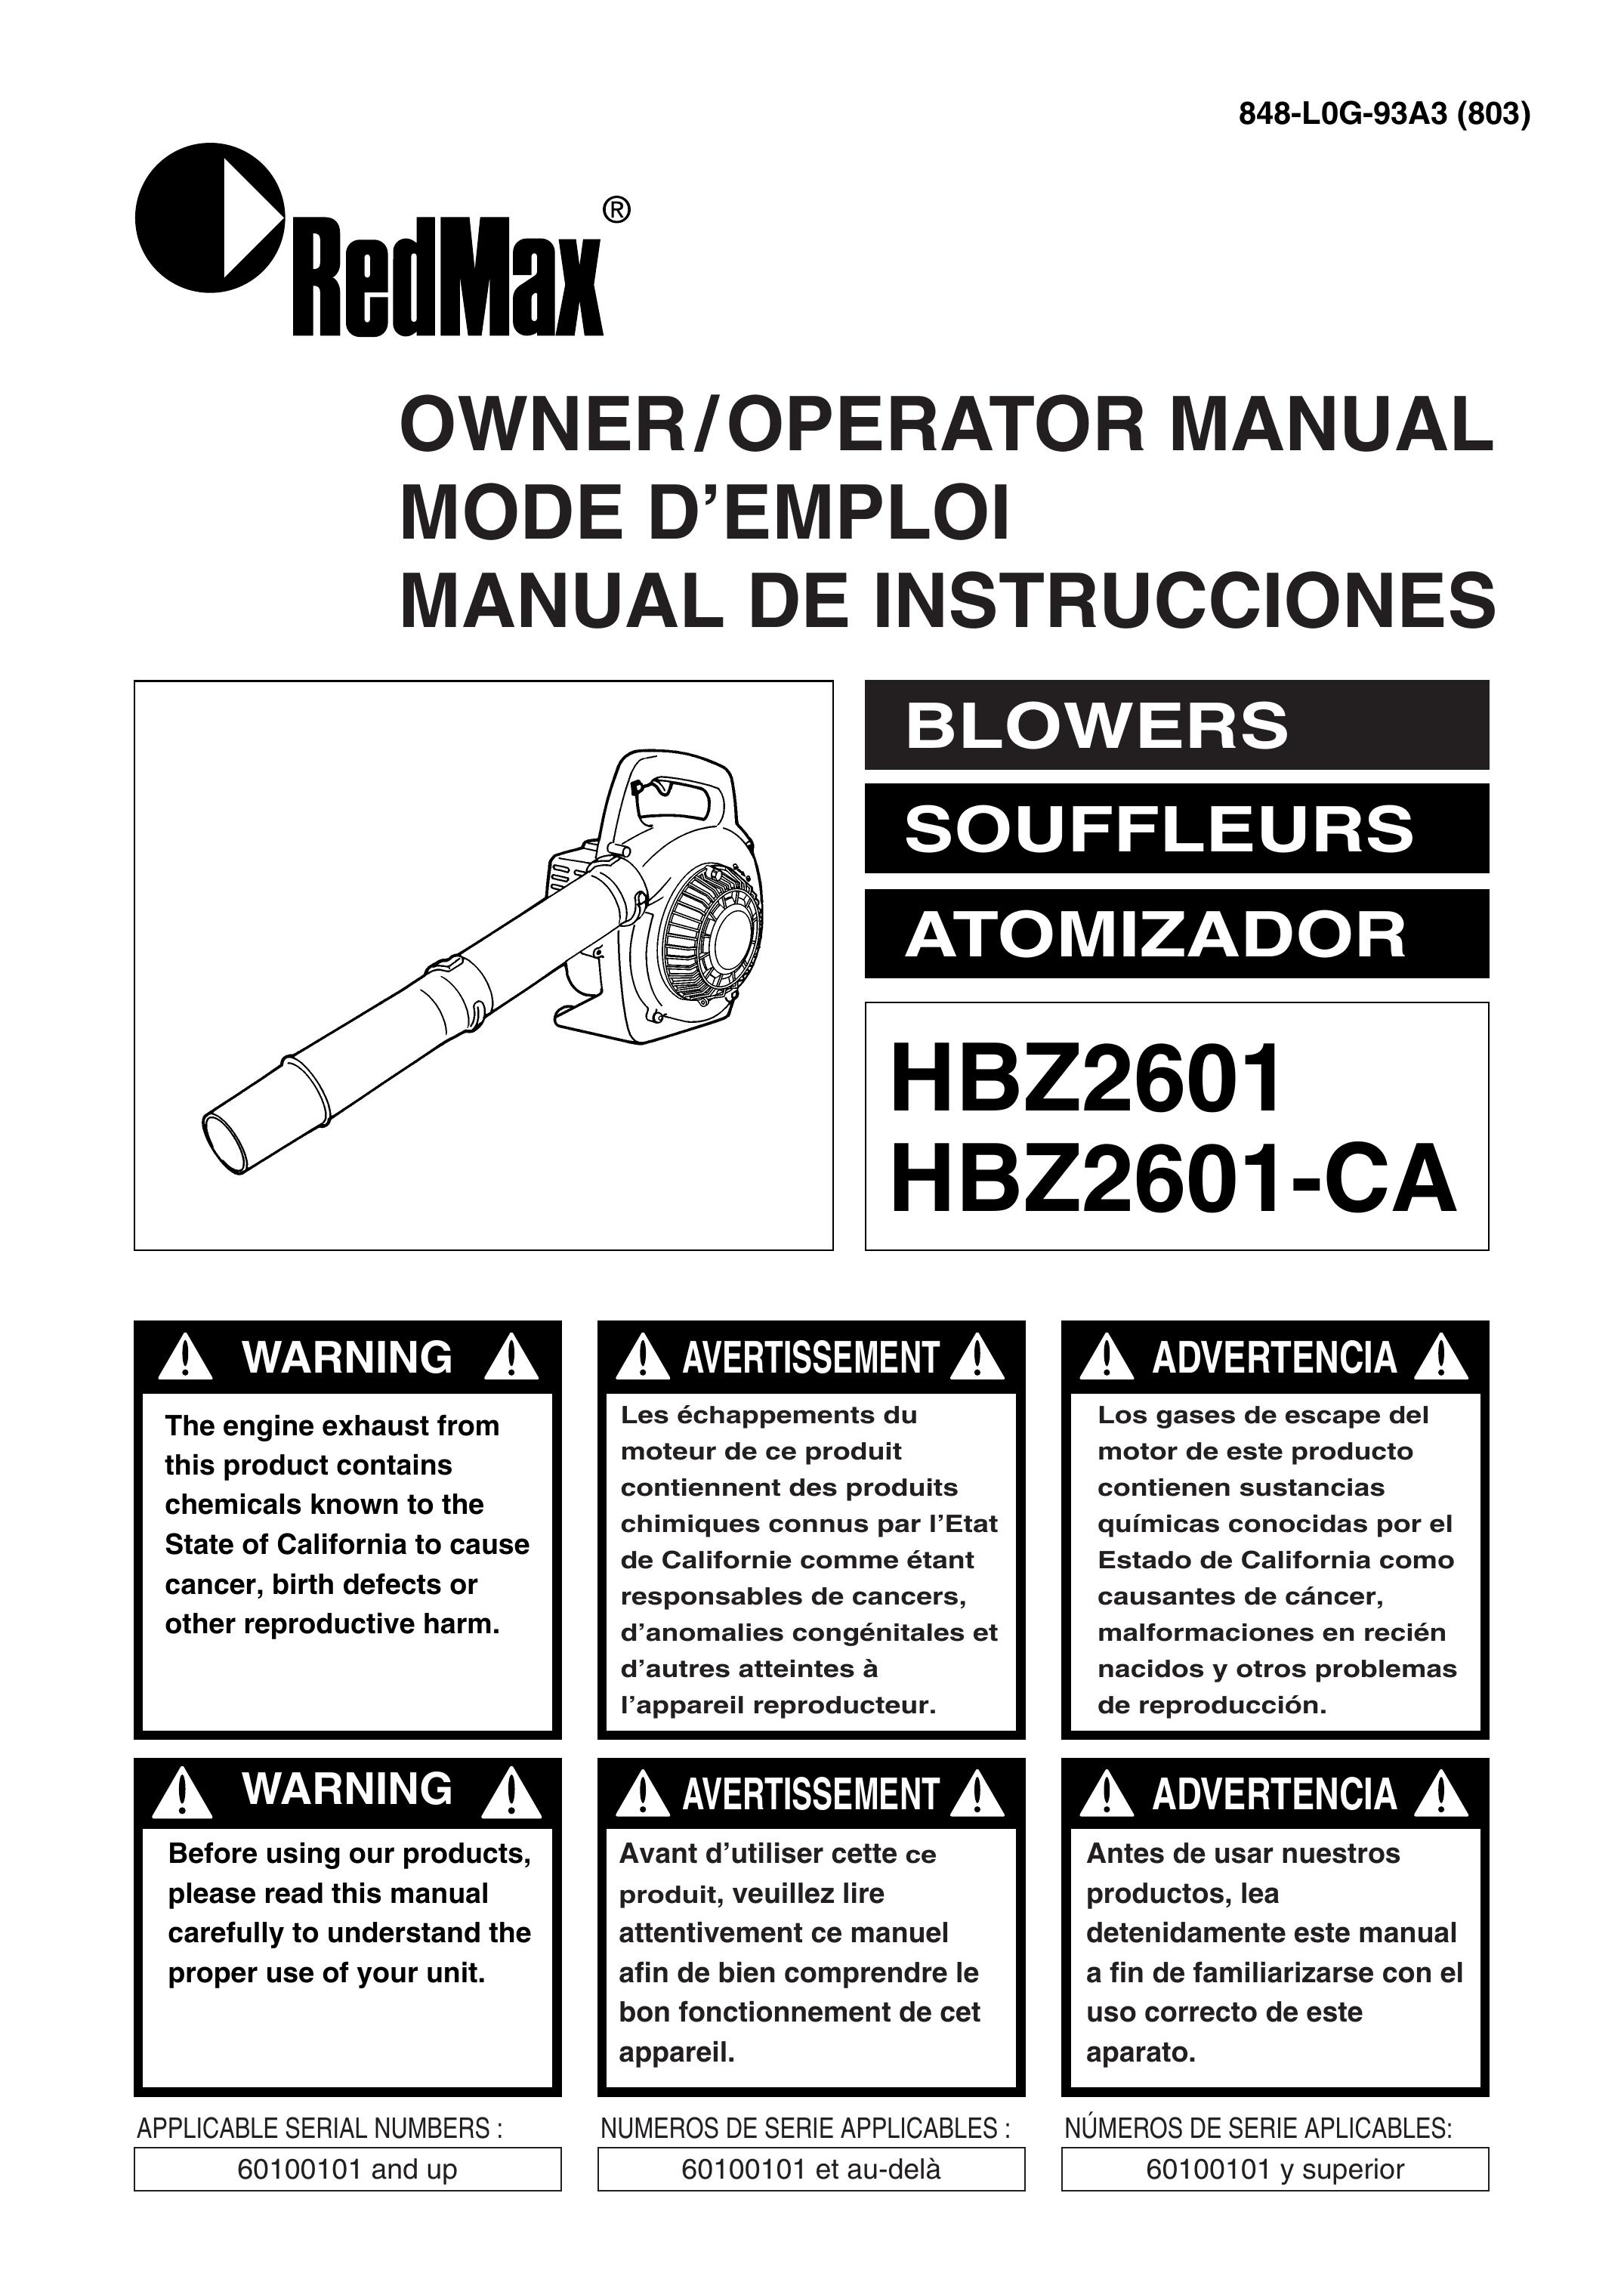 RedMax HBZ2601 Blower User Manual